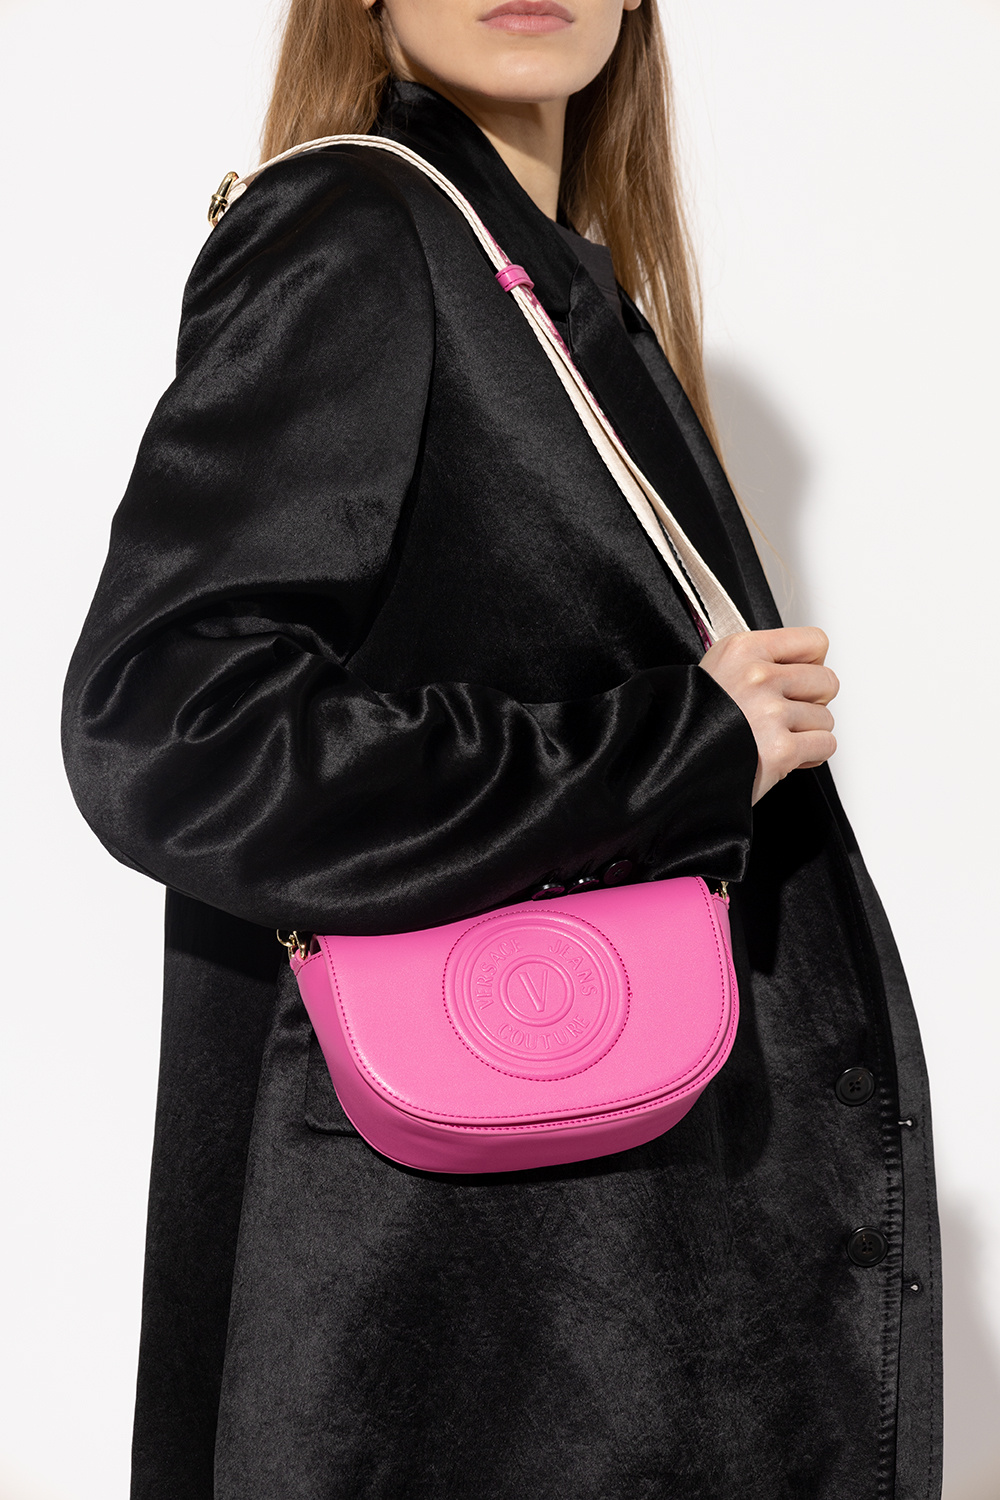 Versace Jeans Couture Shoulder Bag, Os, Black: Handbags